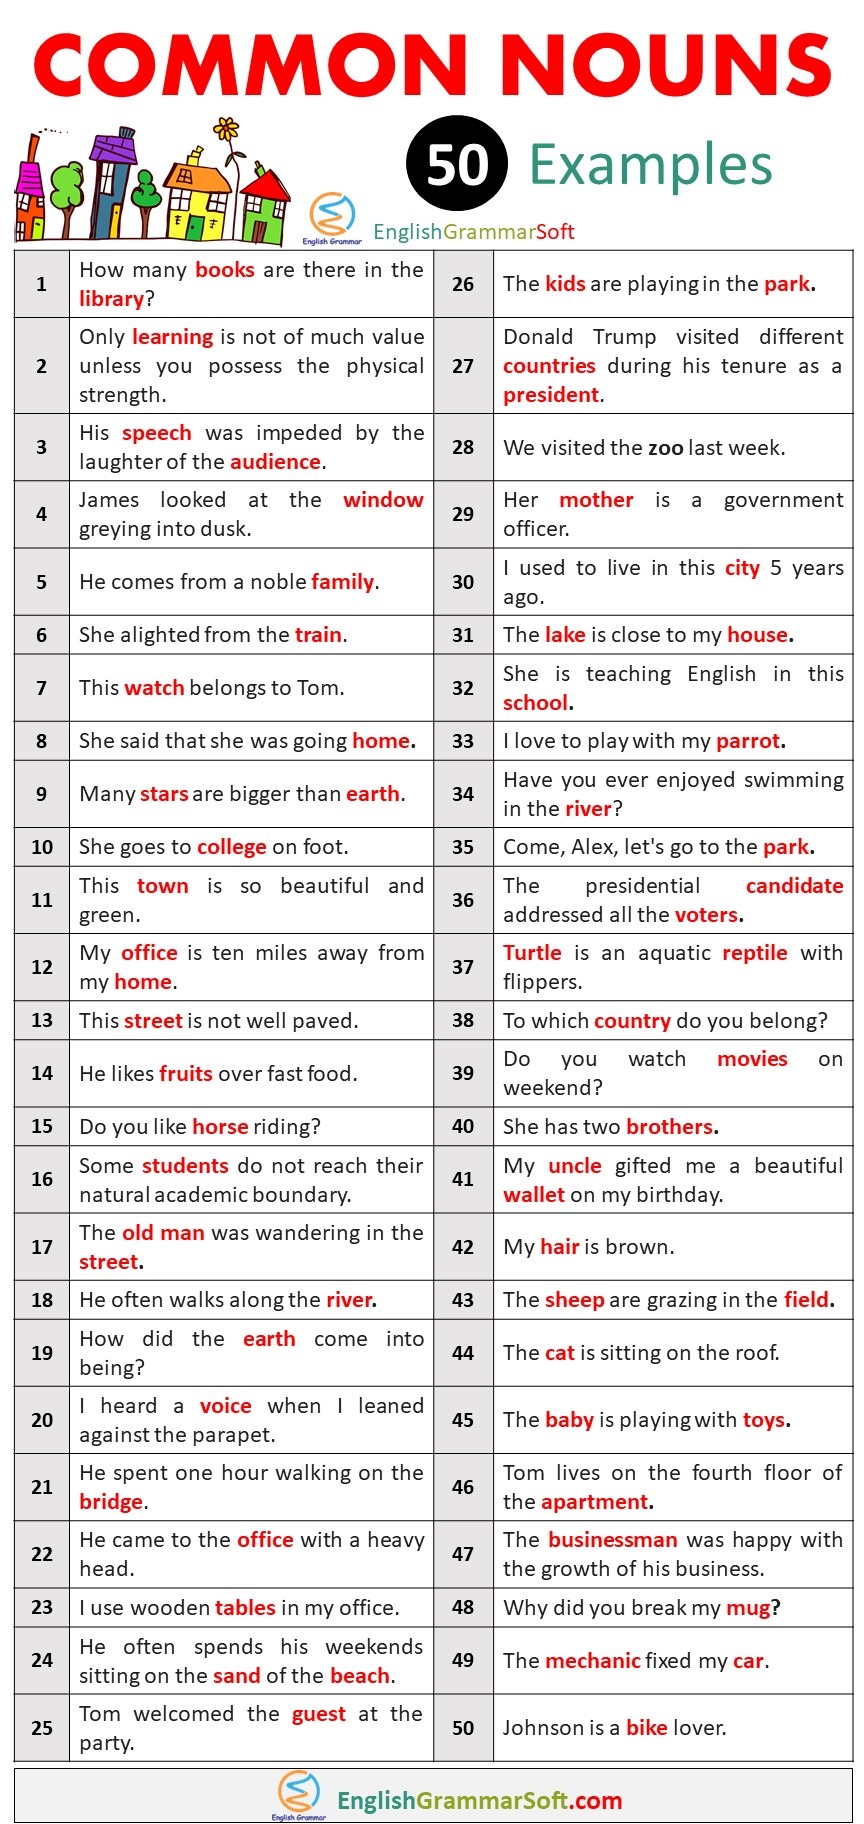 Examples of Common Nouns - 50 Sentences